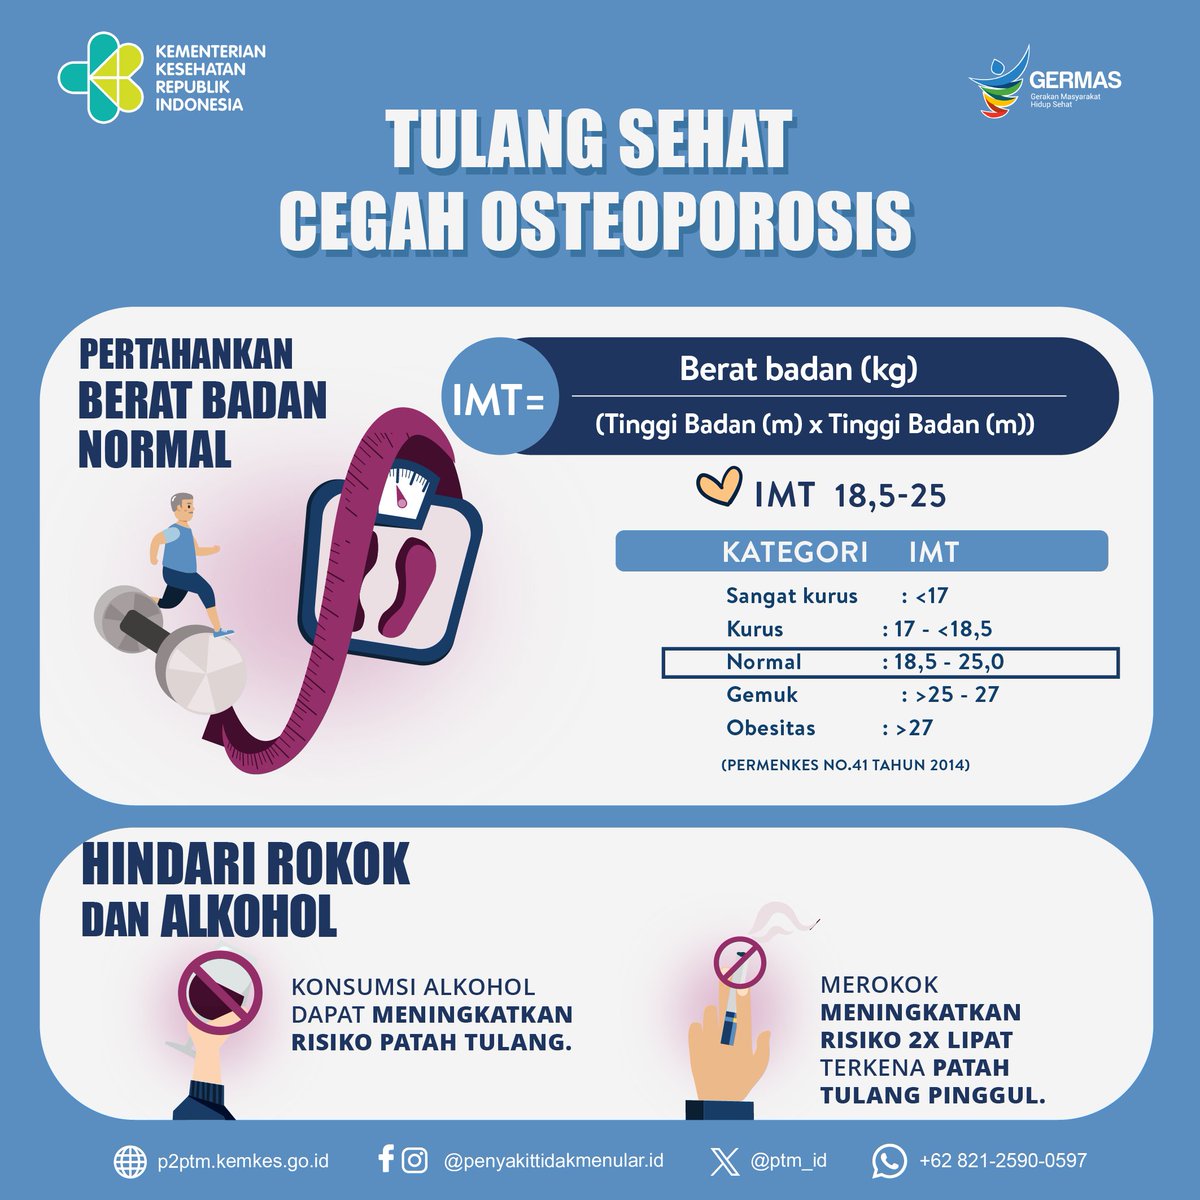 Tulang Sehat, Cegah Osteoporosis
.
#CERDIK #CegahPTM #DukungGERMAS #Osteoporosis #WorldOsteoporosisDay